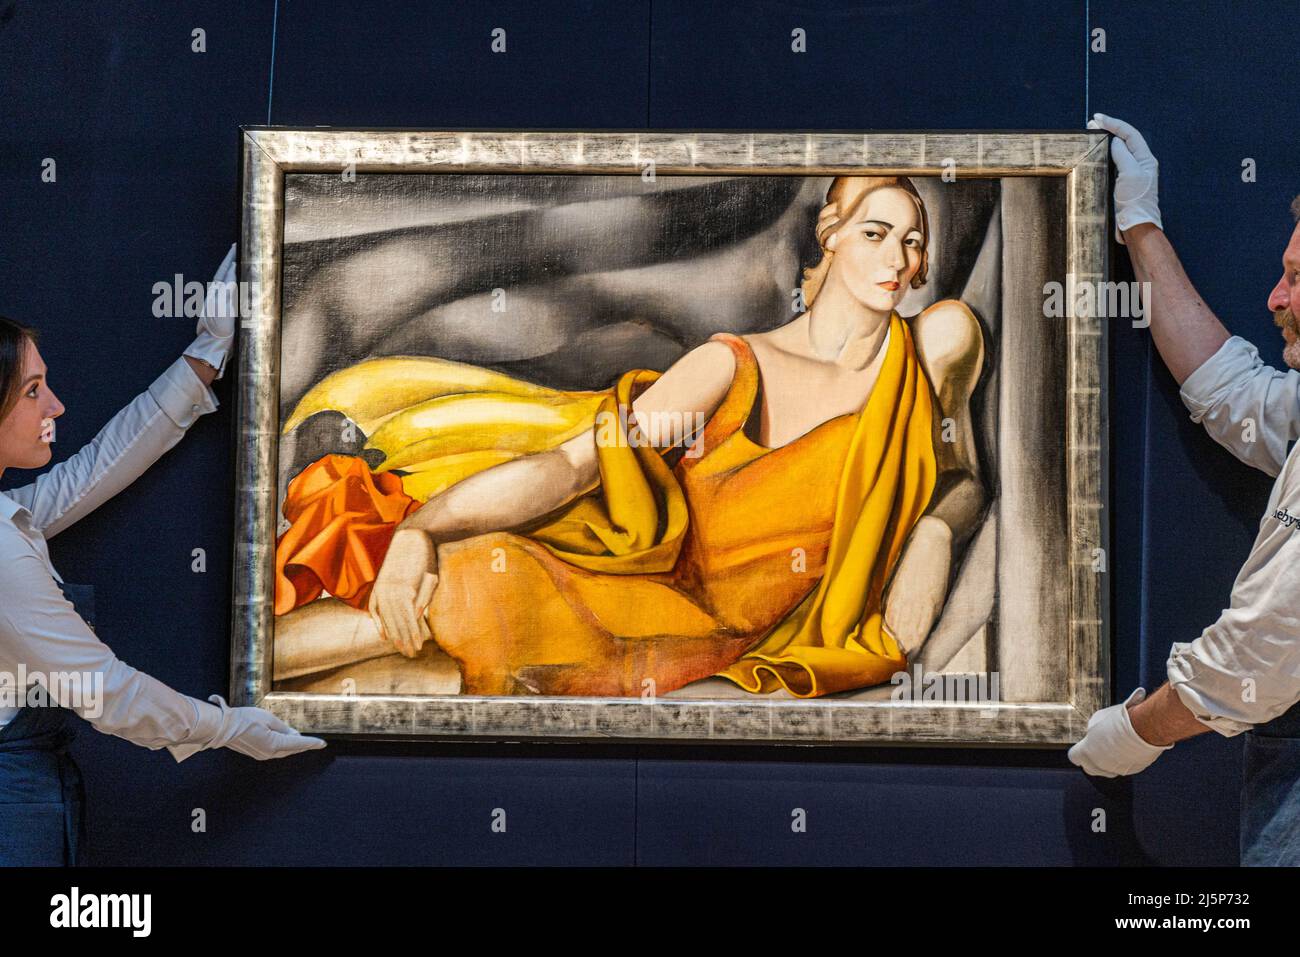 TAMARA LEMPICKA mujer en Gran ciudad en mural gigante PINTURA Art D